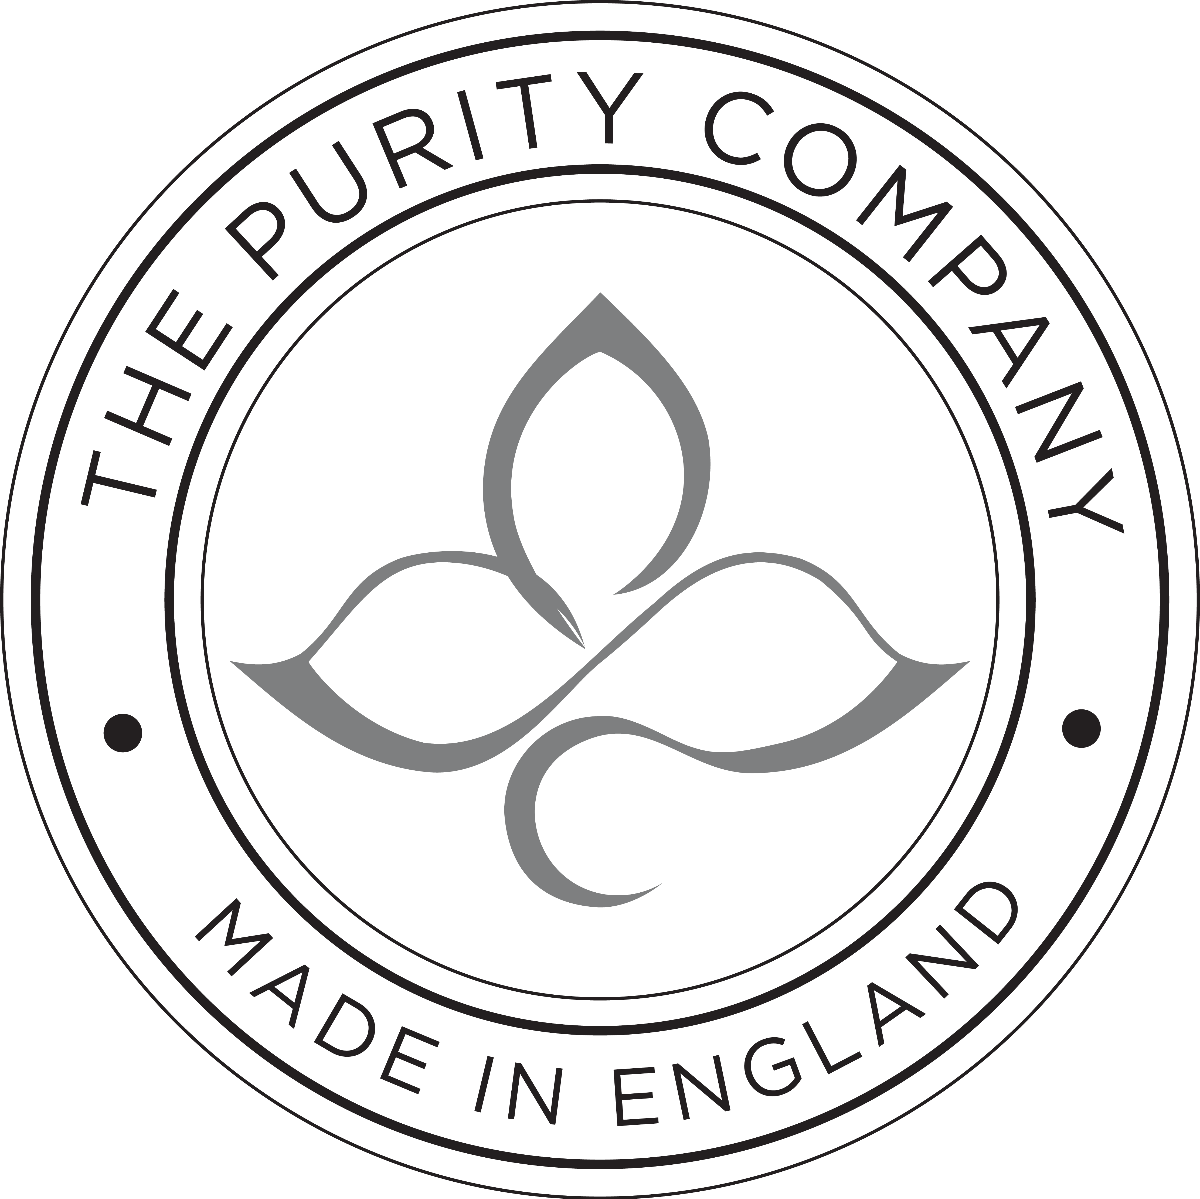 The Purity Company-Image-35